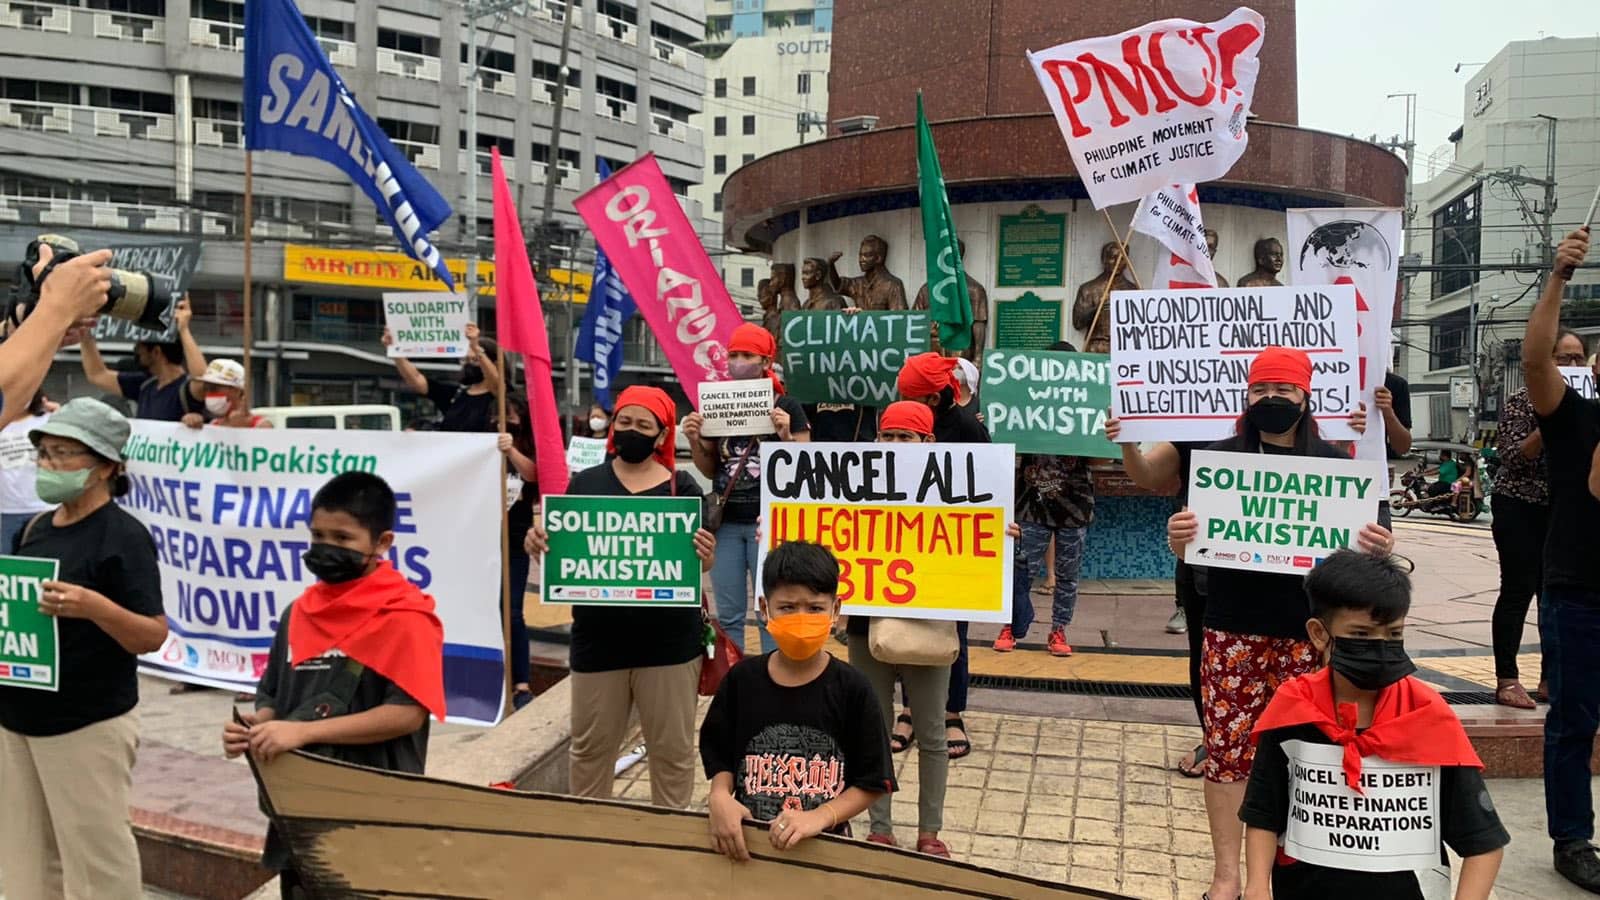 A dozen protesters with signs stand in a public square in Manilla